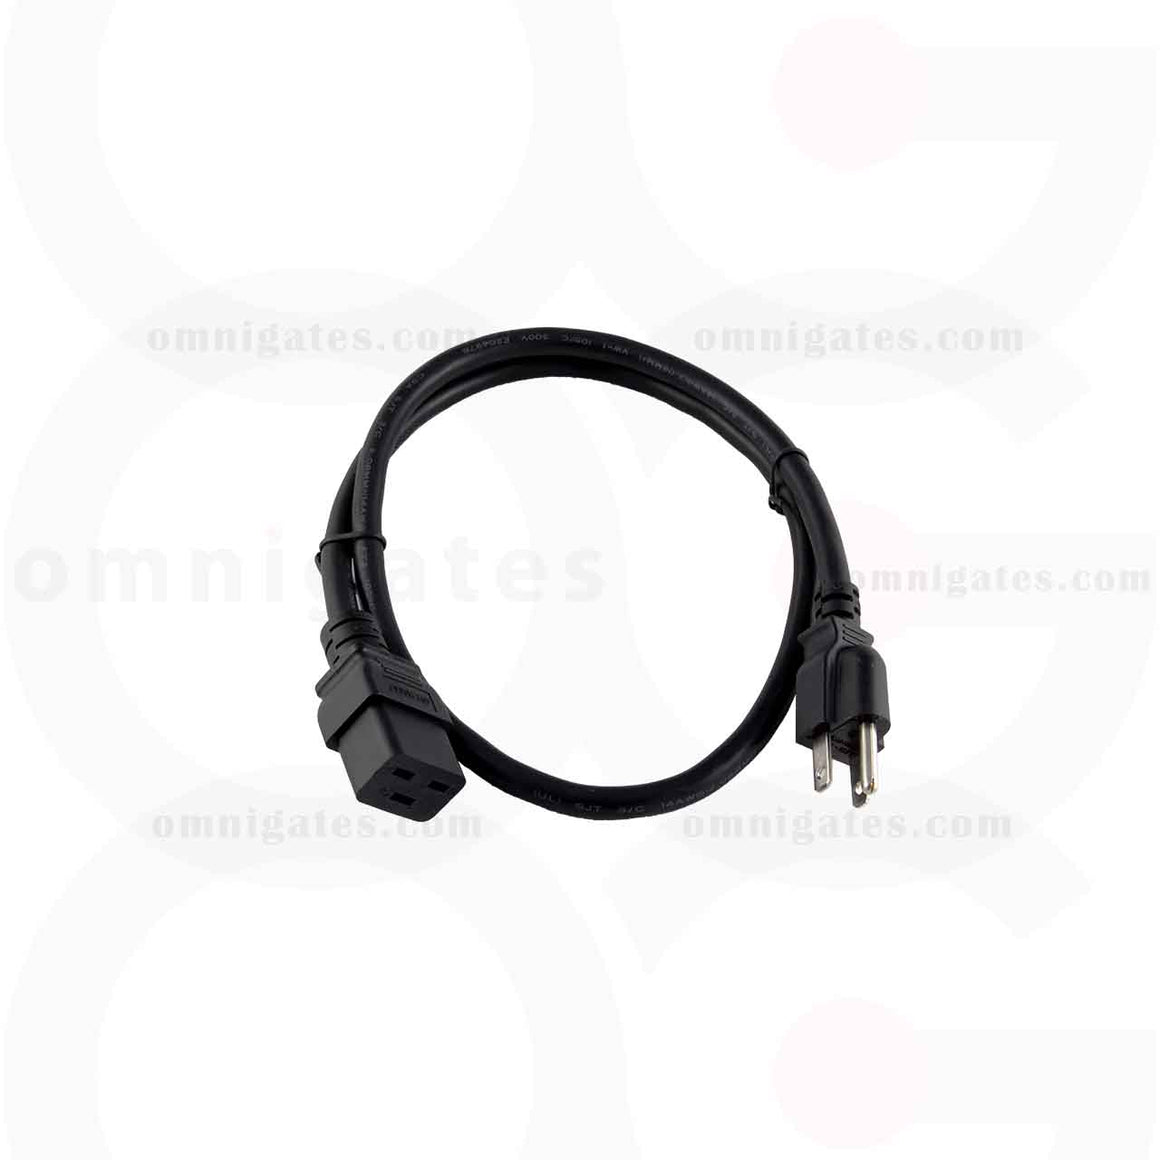 Power Cord 14AWG, 15A 250V, NEMA 5-15P/IEC C19 Connector Cable, Black, 3 feet